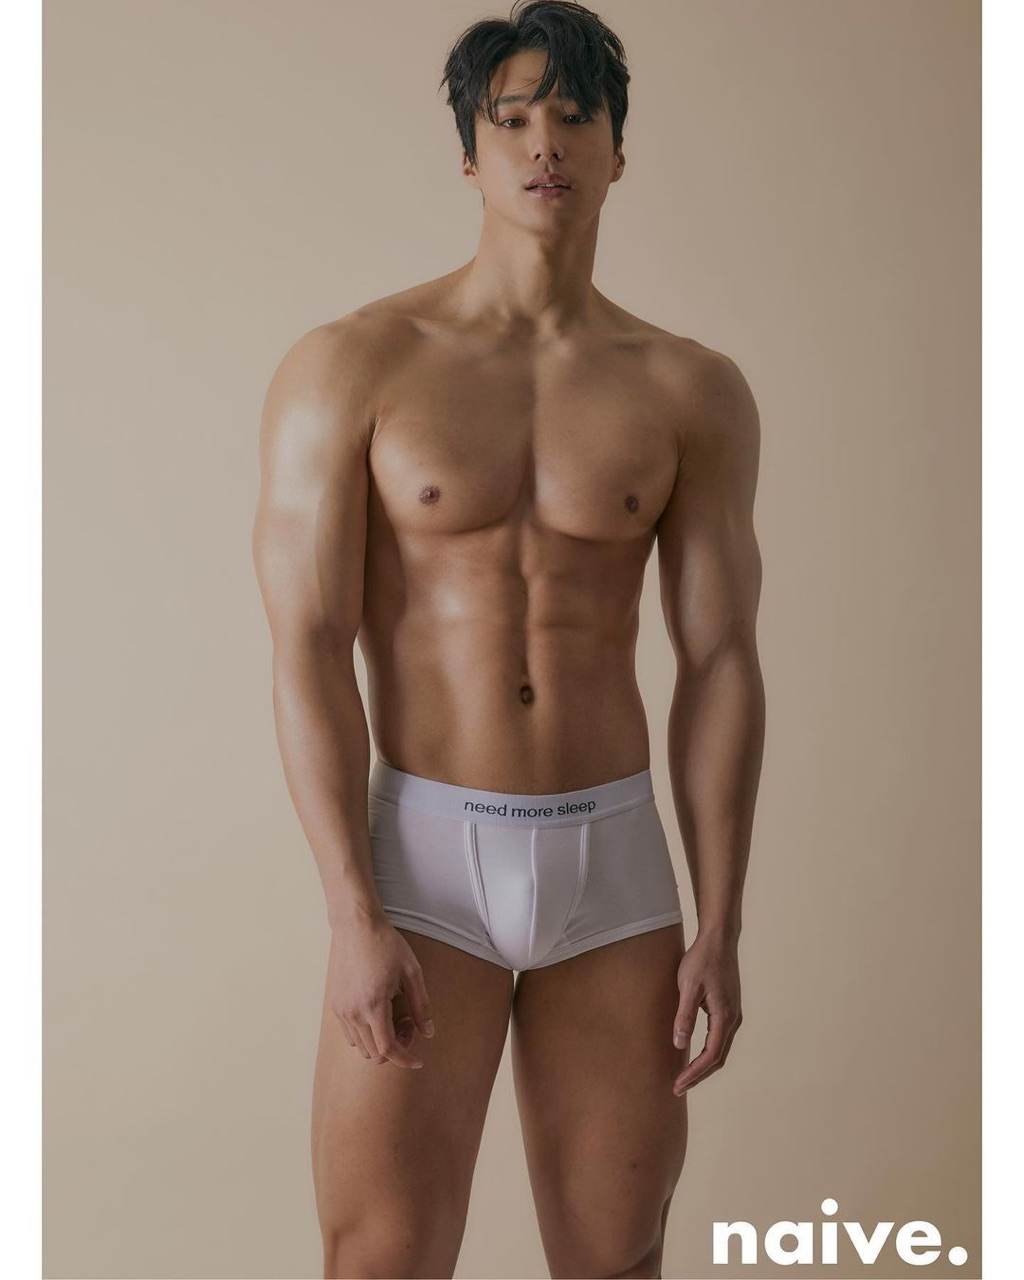 Hot men in underwear 539